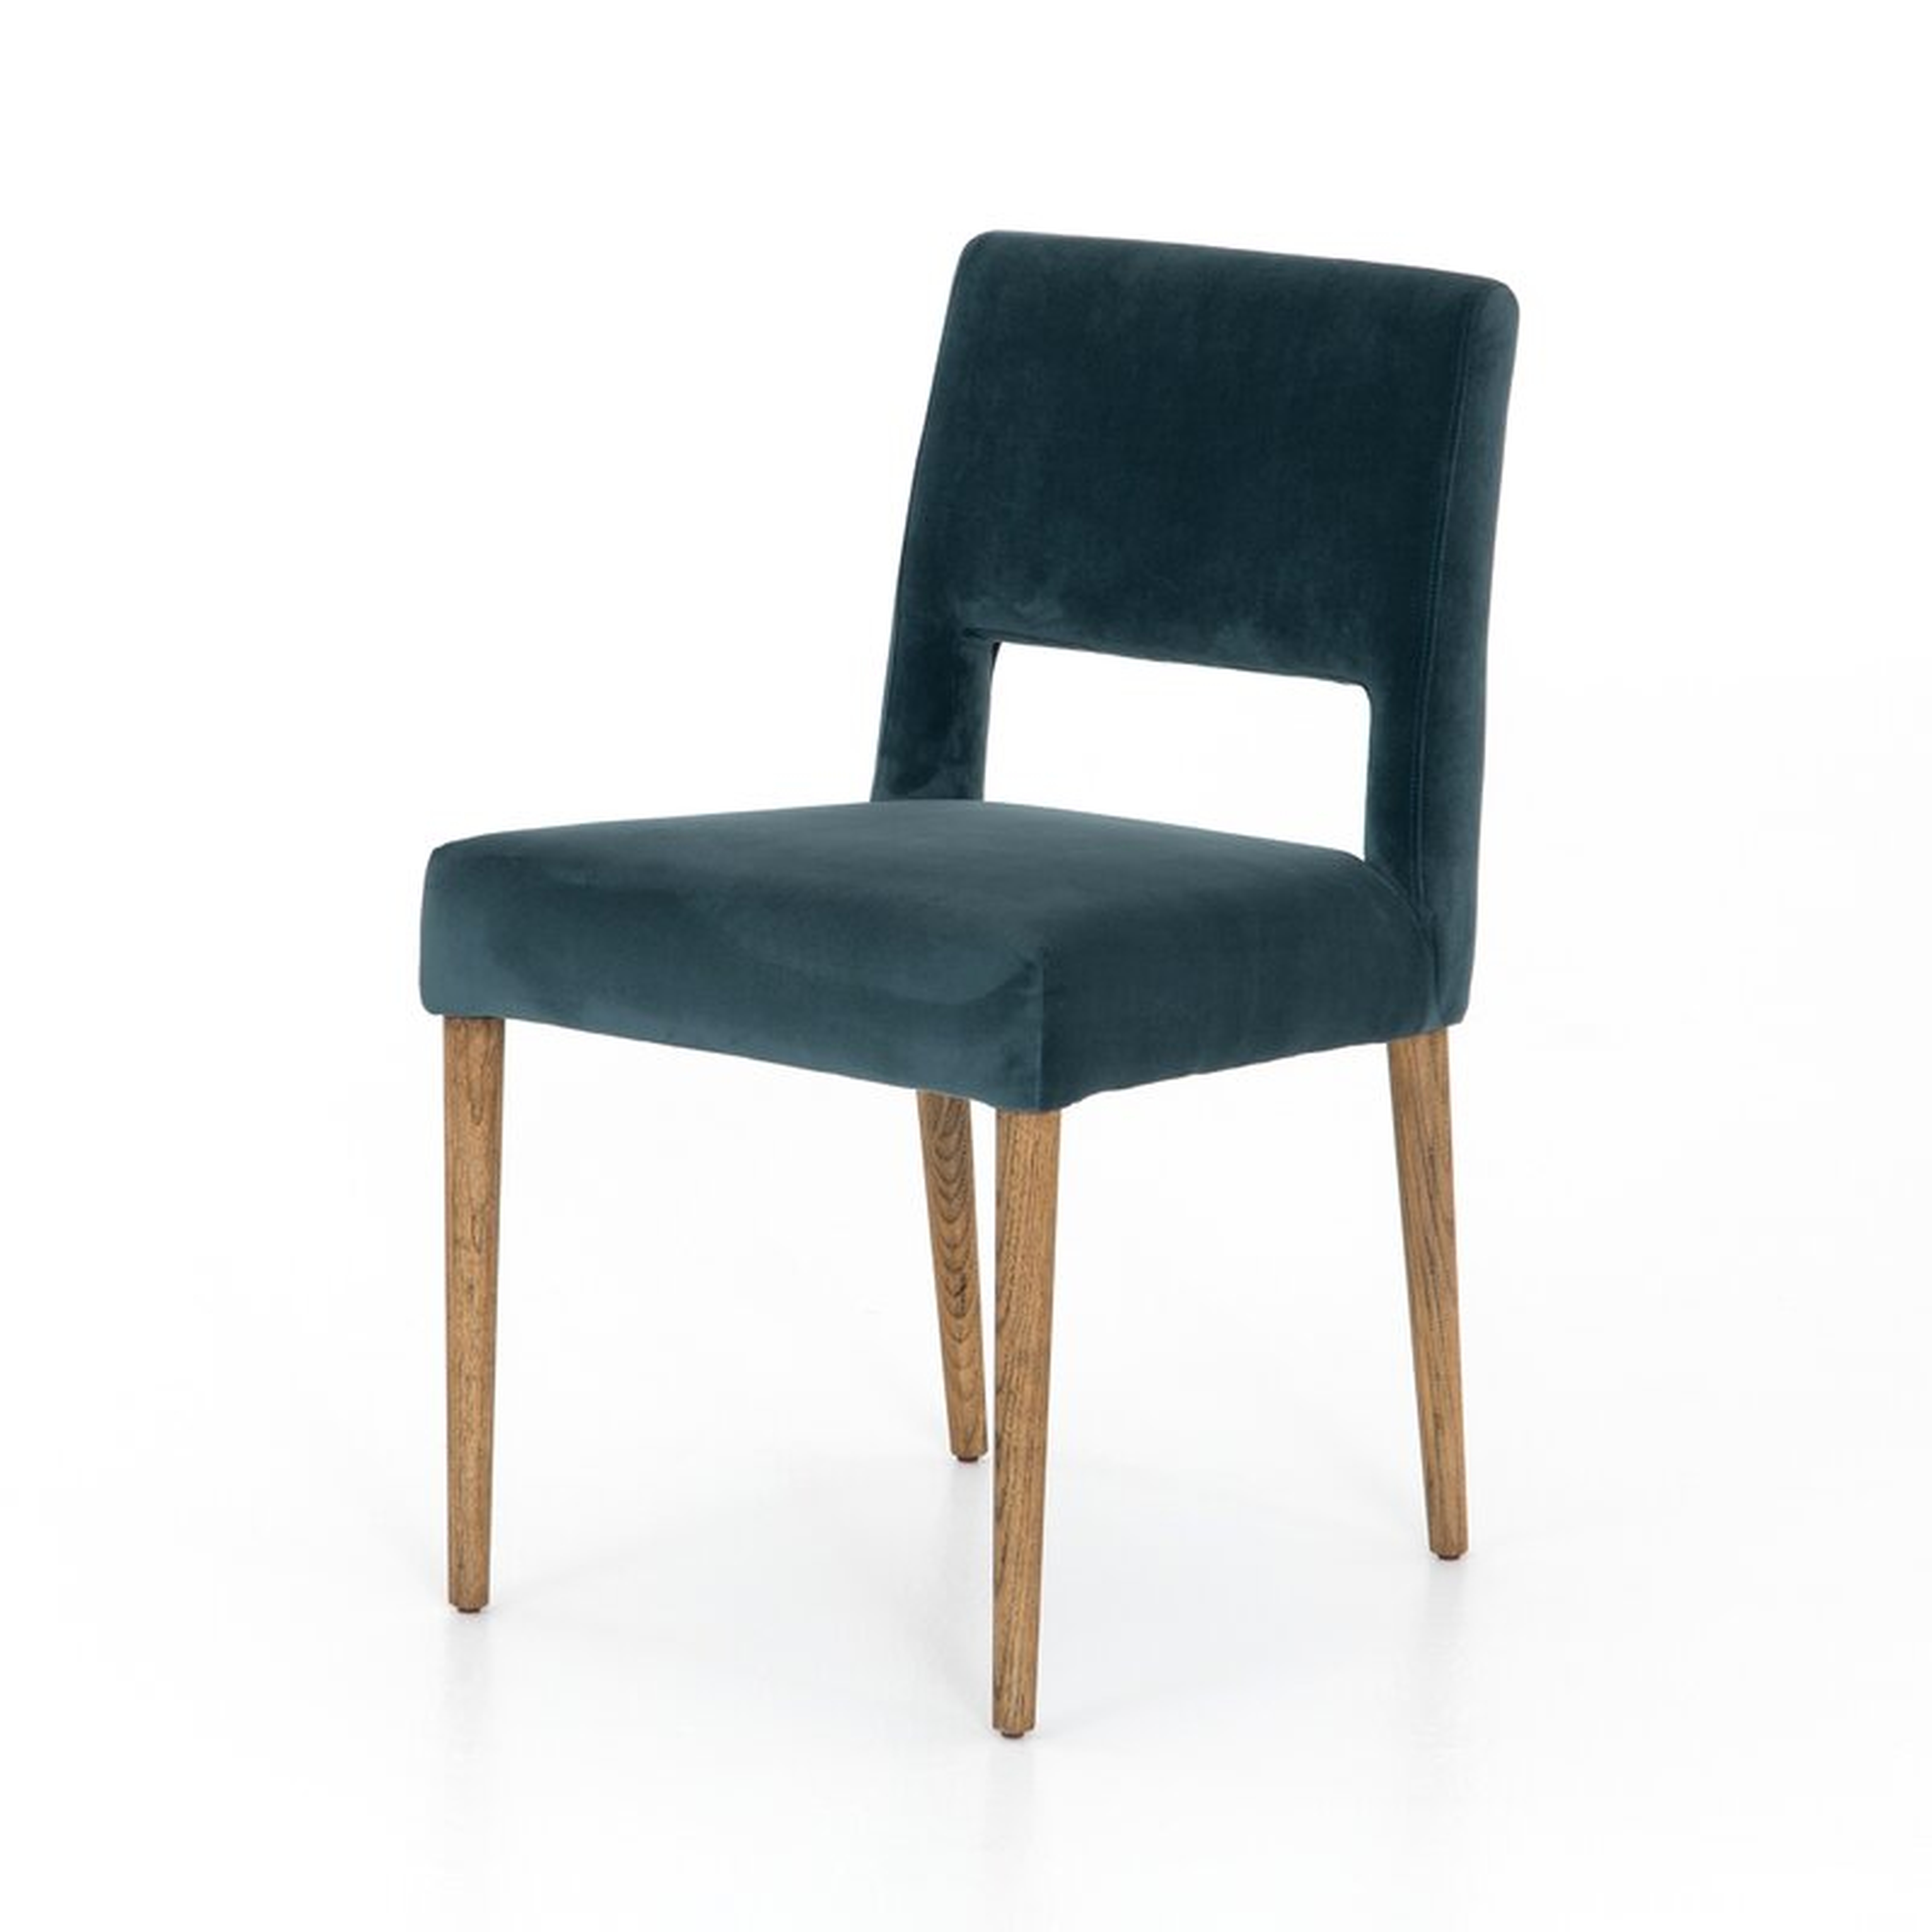 Four Hands Ashford Upholstered Side Chair in Bella Jasper- Back in Stock Nov 12, 2020. - Perigold